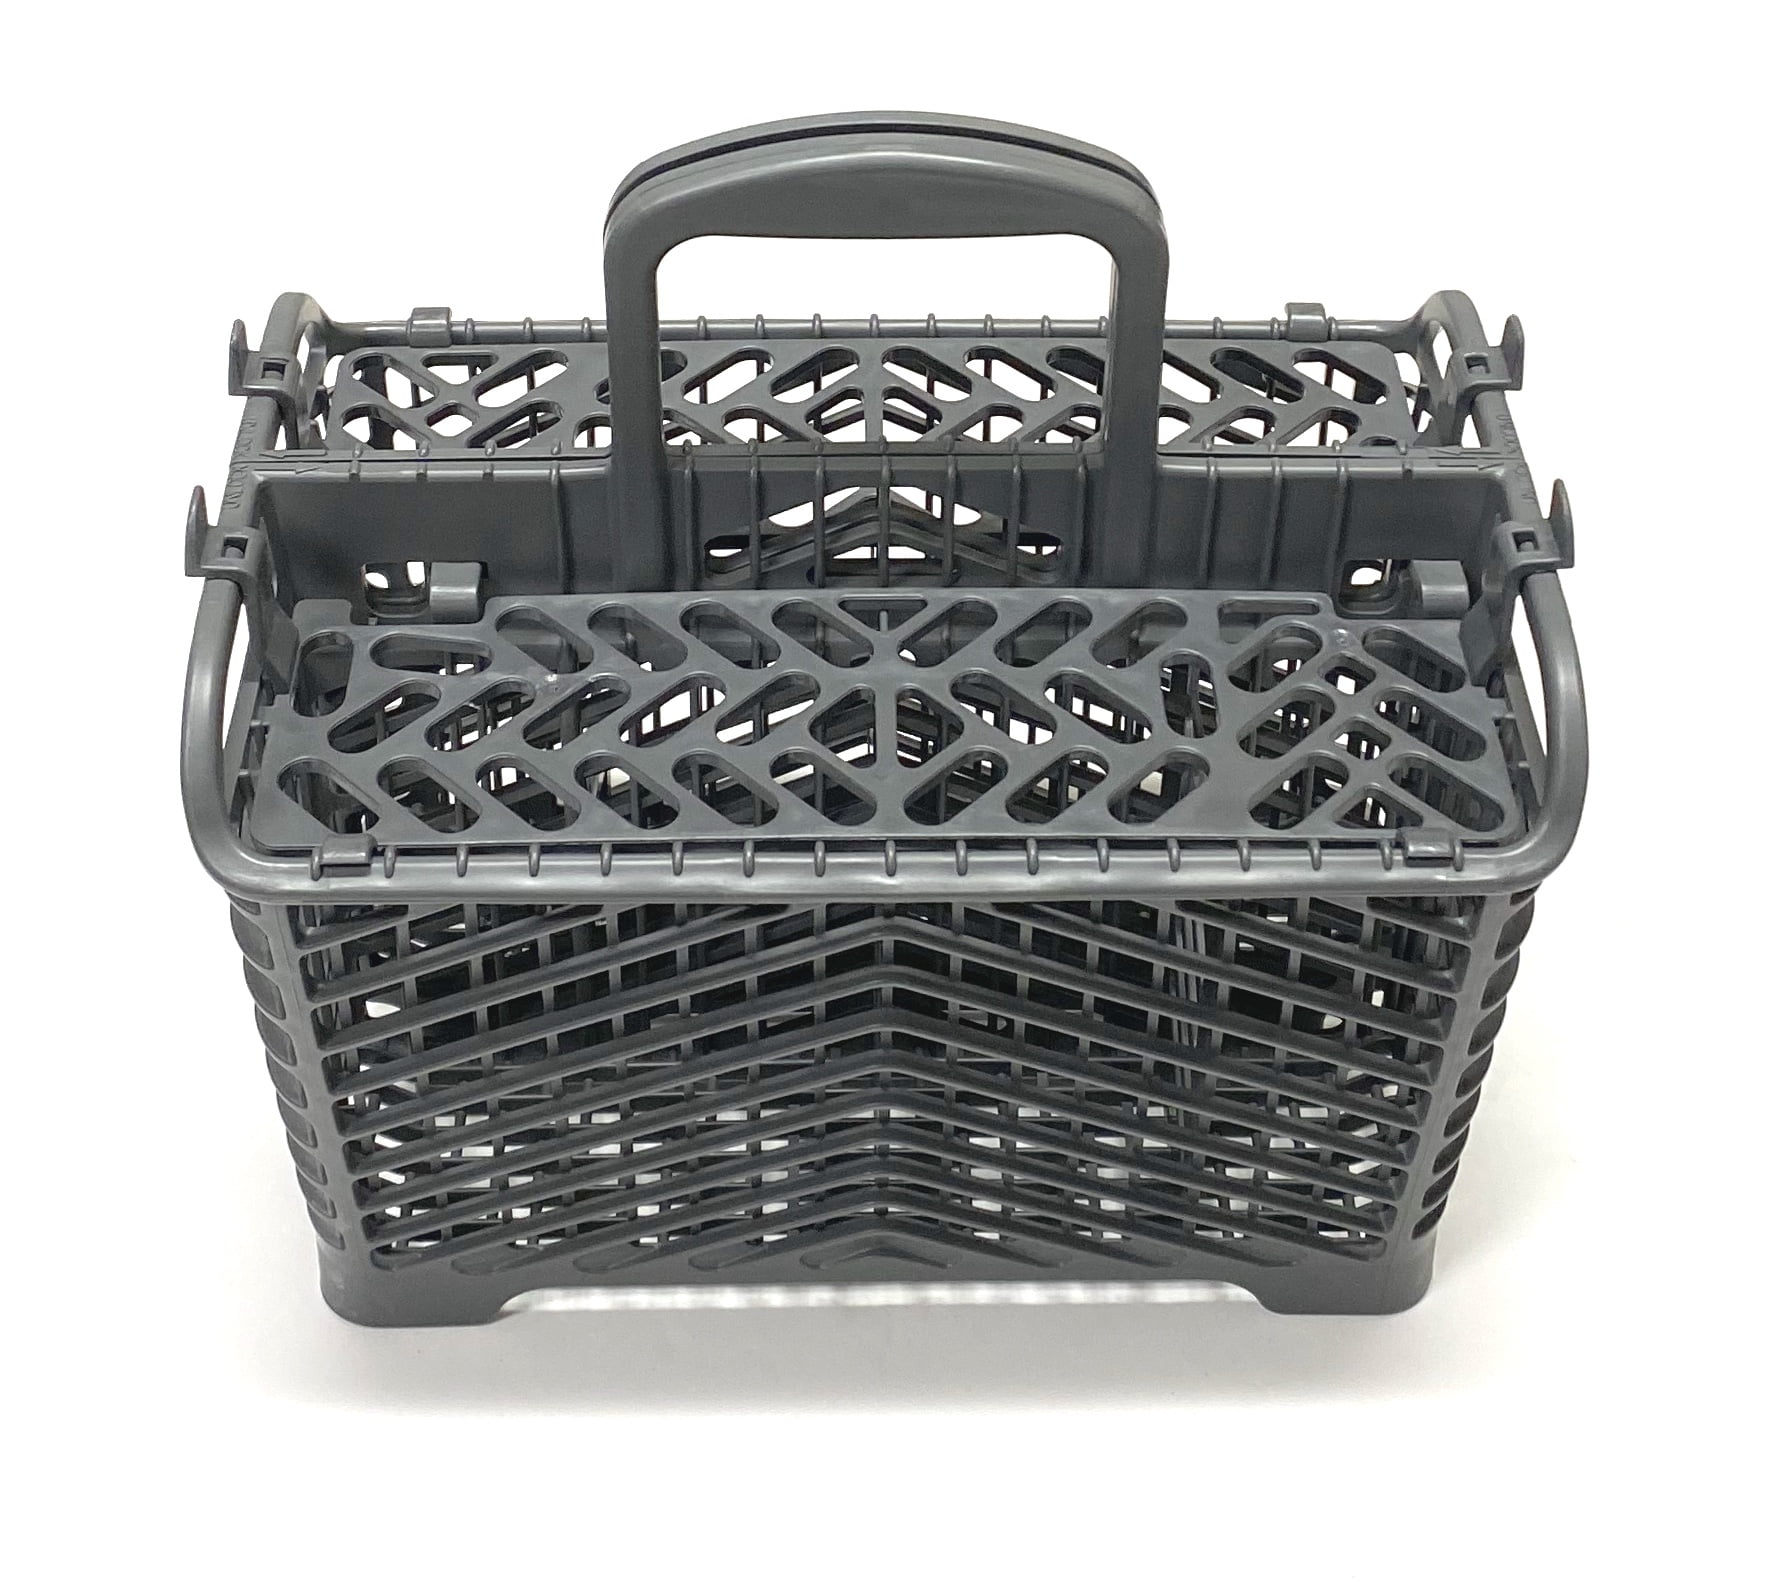 Maytag Jetclean Dishwasher Replacement Silverware Basket NEW 